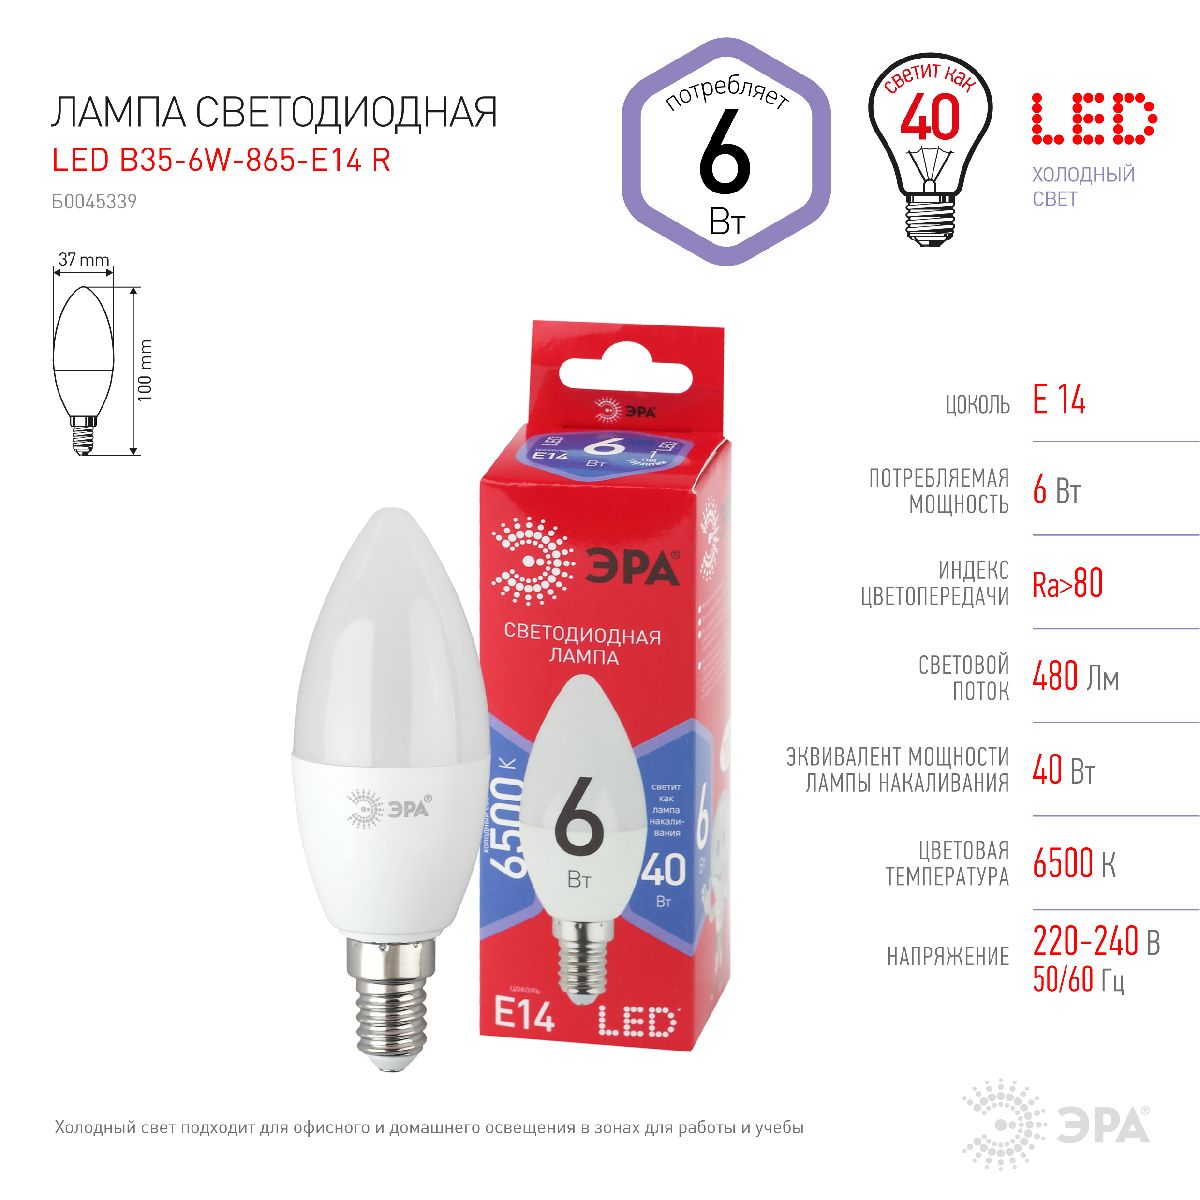 Лампа светодиодная Эра E14 6W 6500K LED B35-6W-865-E14 R Б0045339